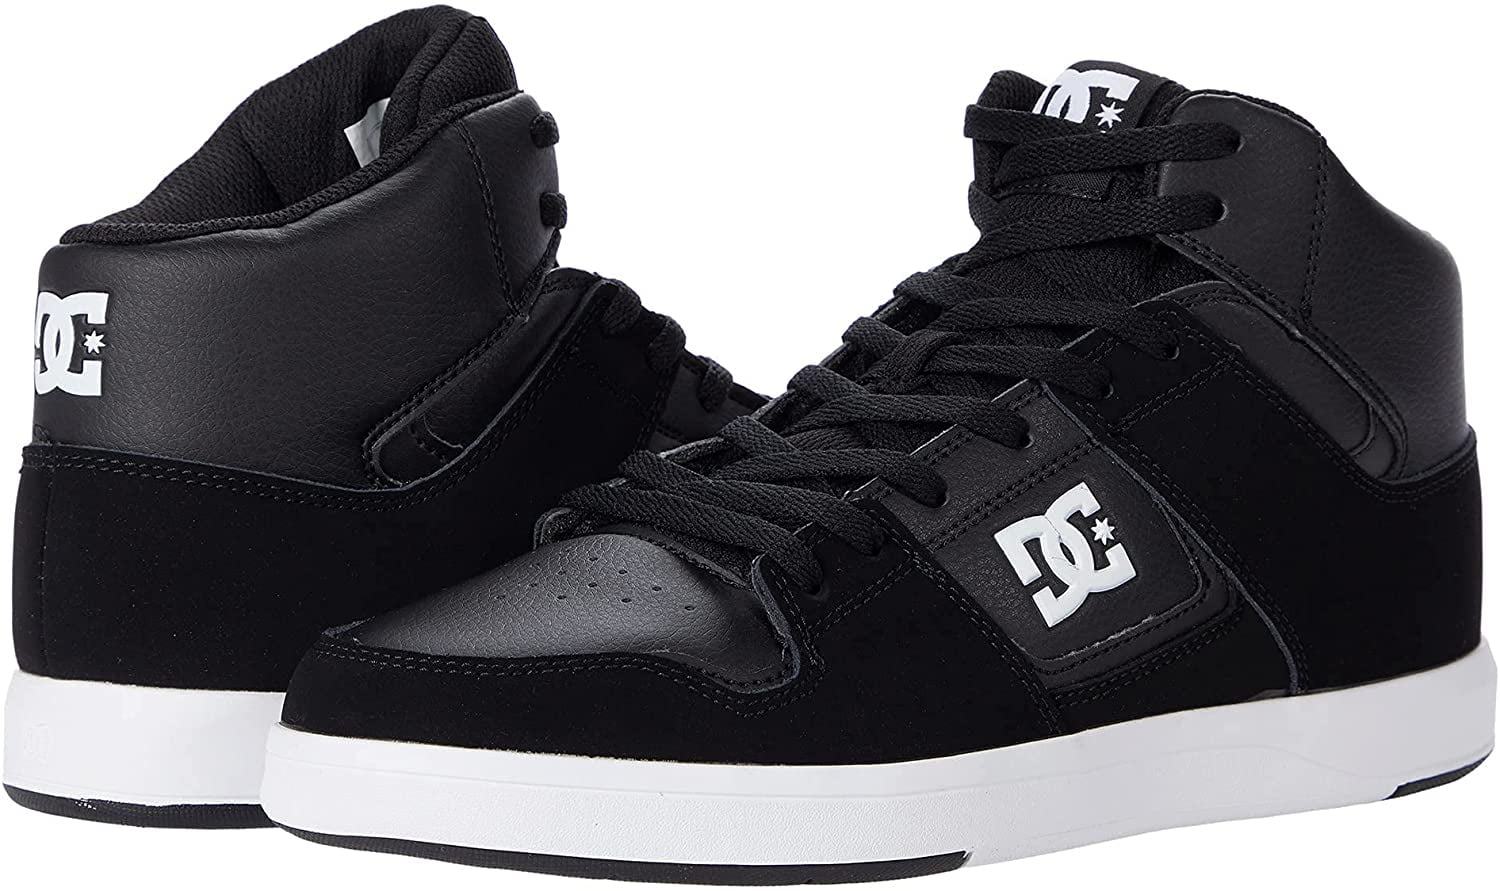 DC Shoes Men's DC-Metric Sneakers Low-Top Skate Shoes Grey/Black/Red | eBay